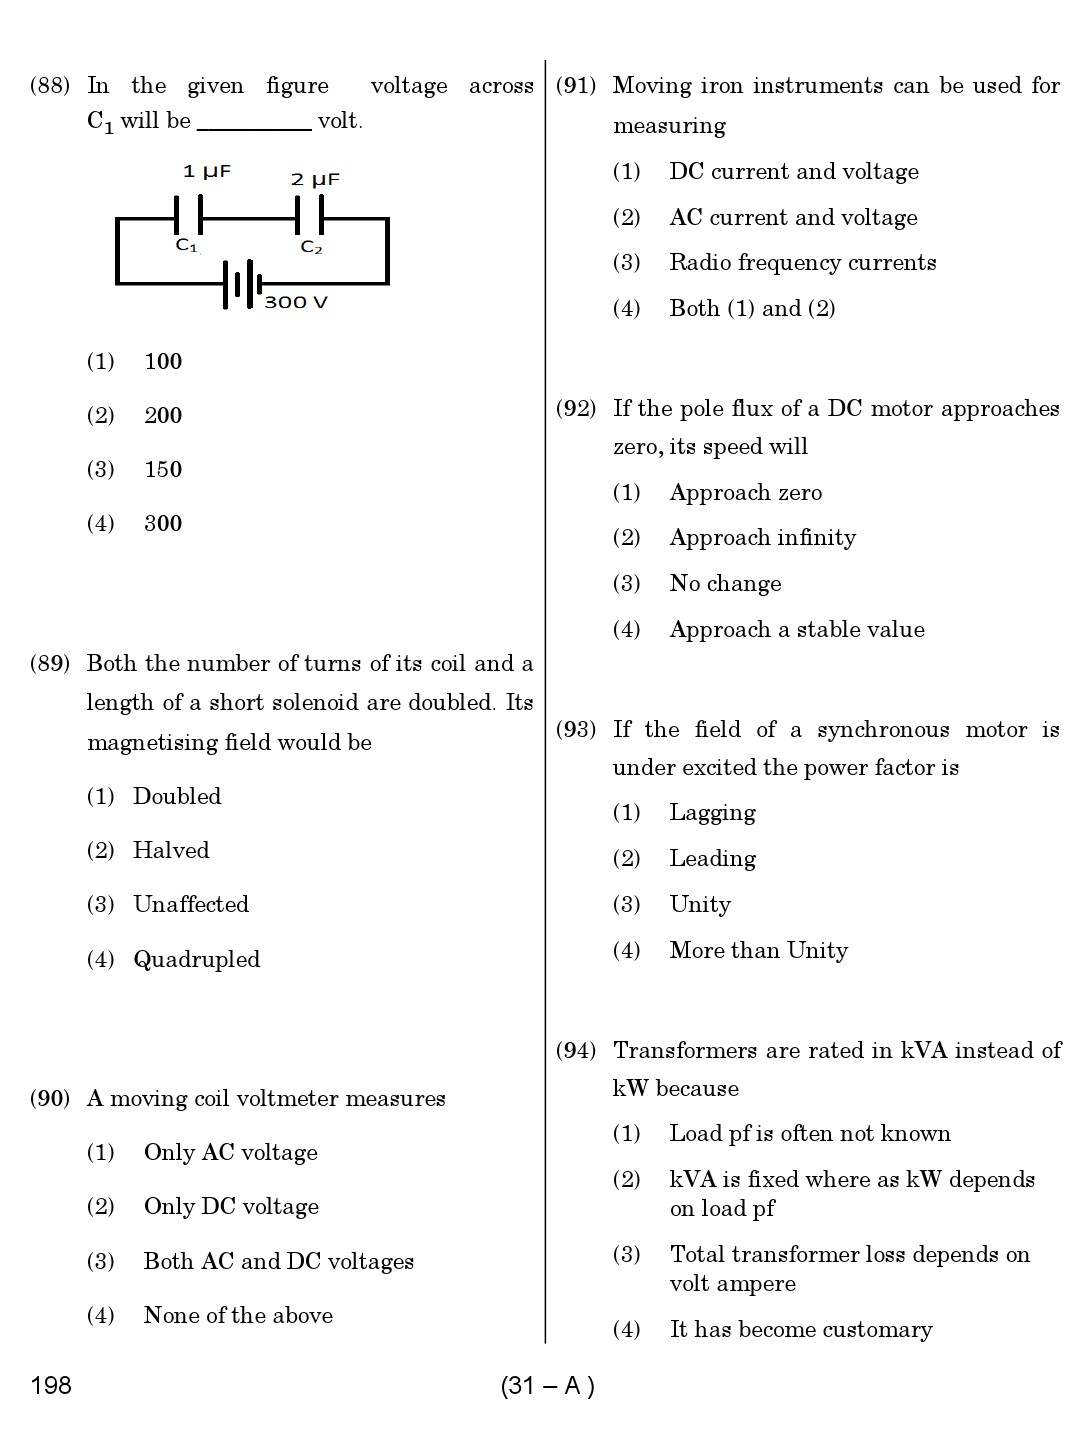 Karnataka PSC Junior Engineer Electrical Exam Sample Question Paper 31